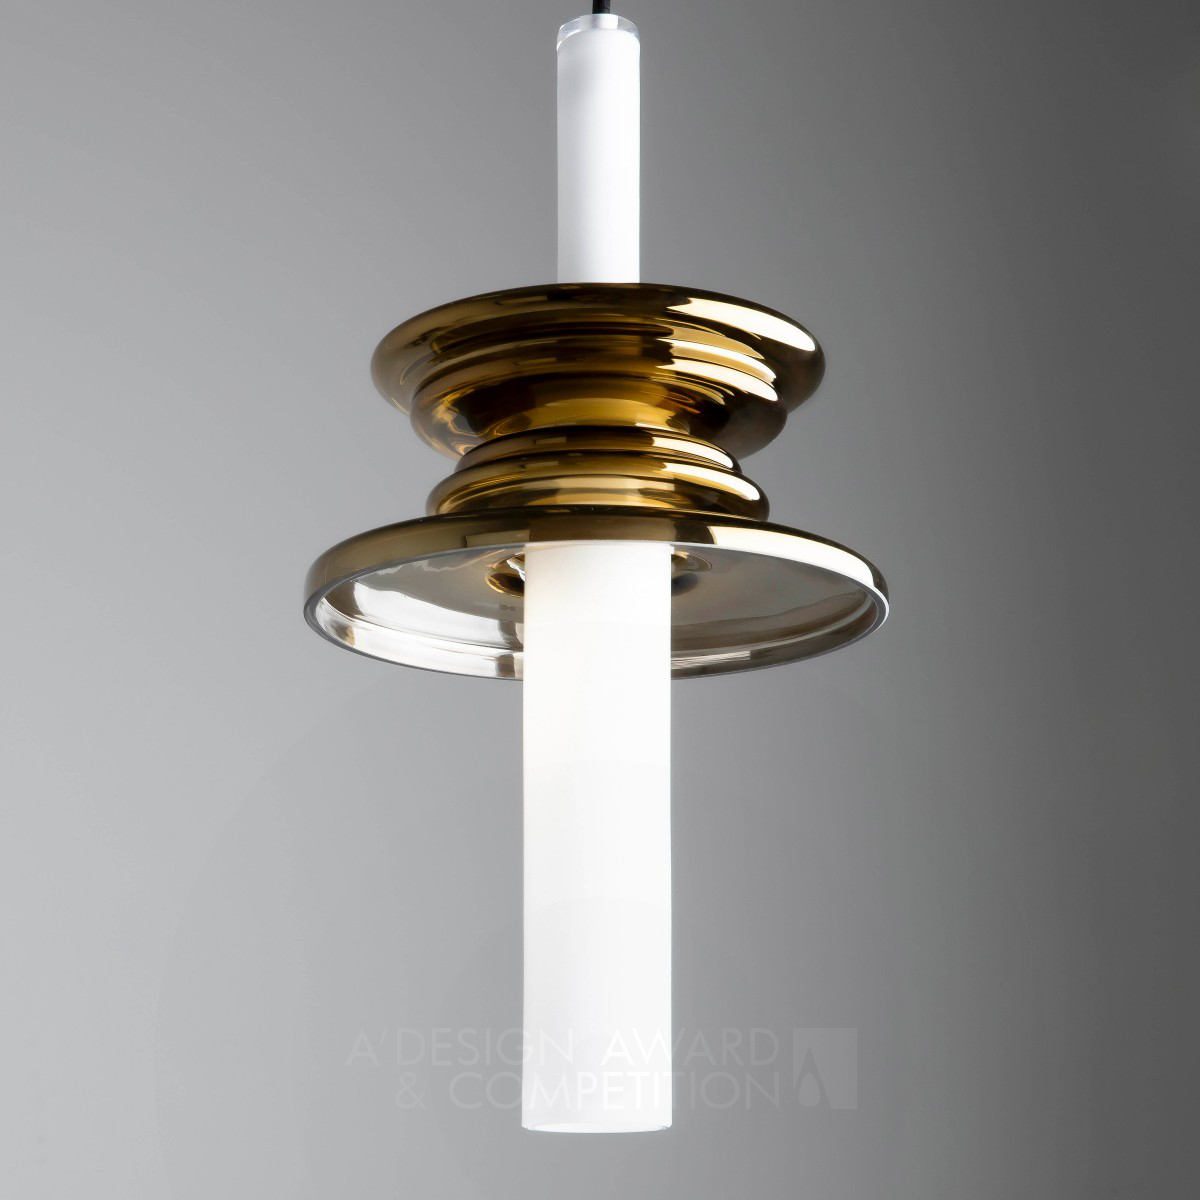 Sound Wave Pendant Lamp by Alexey Danilin